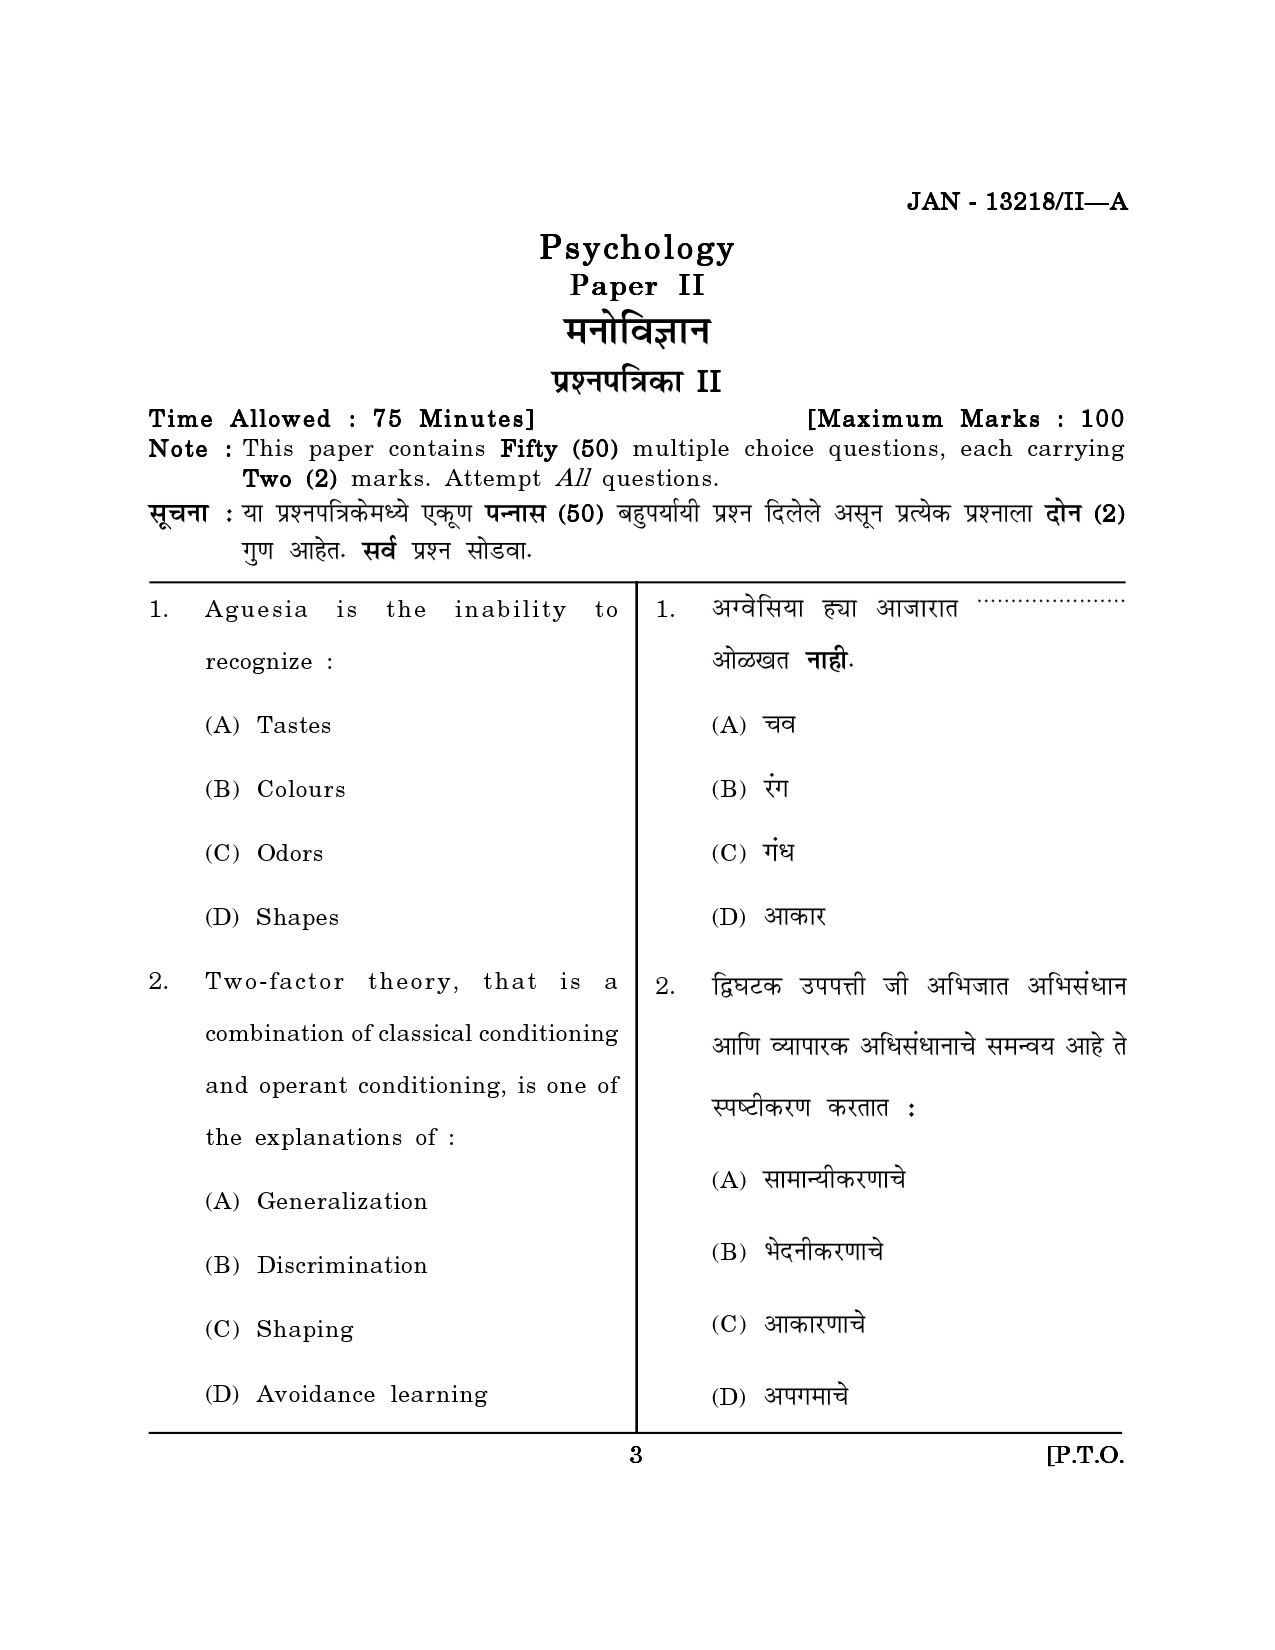 Maharashtra SET Psychology Question Paper II January 2018 2